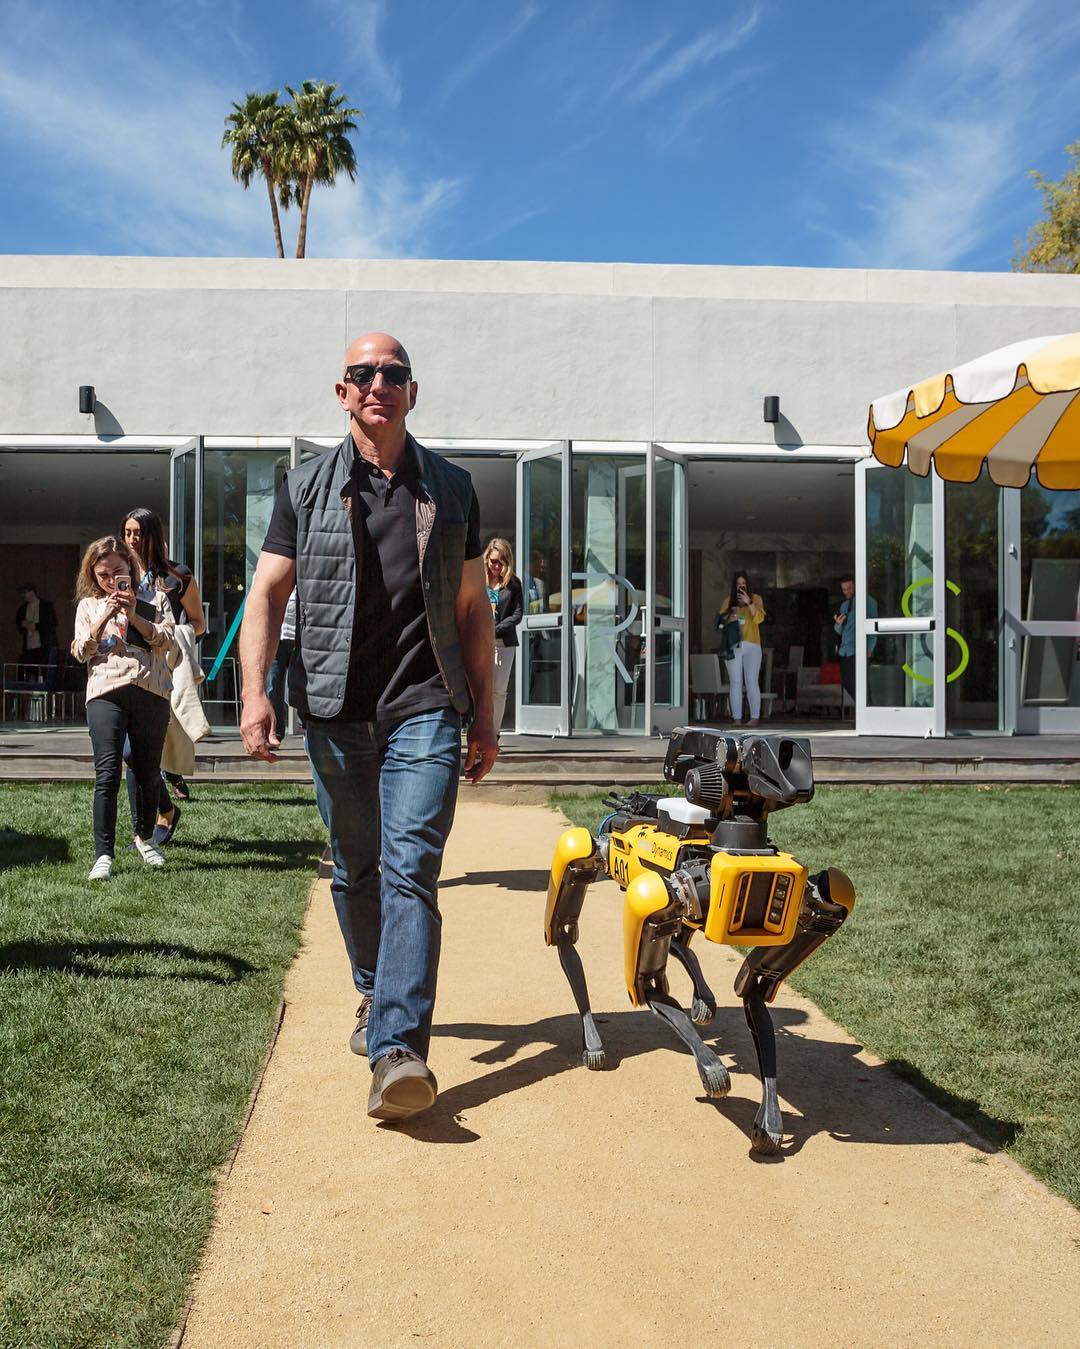 Jeff Bezos SpotMini robot dog